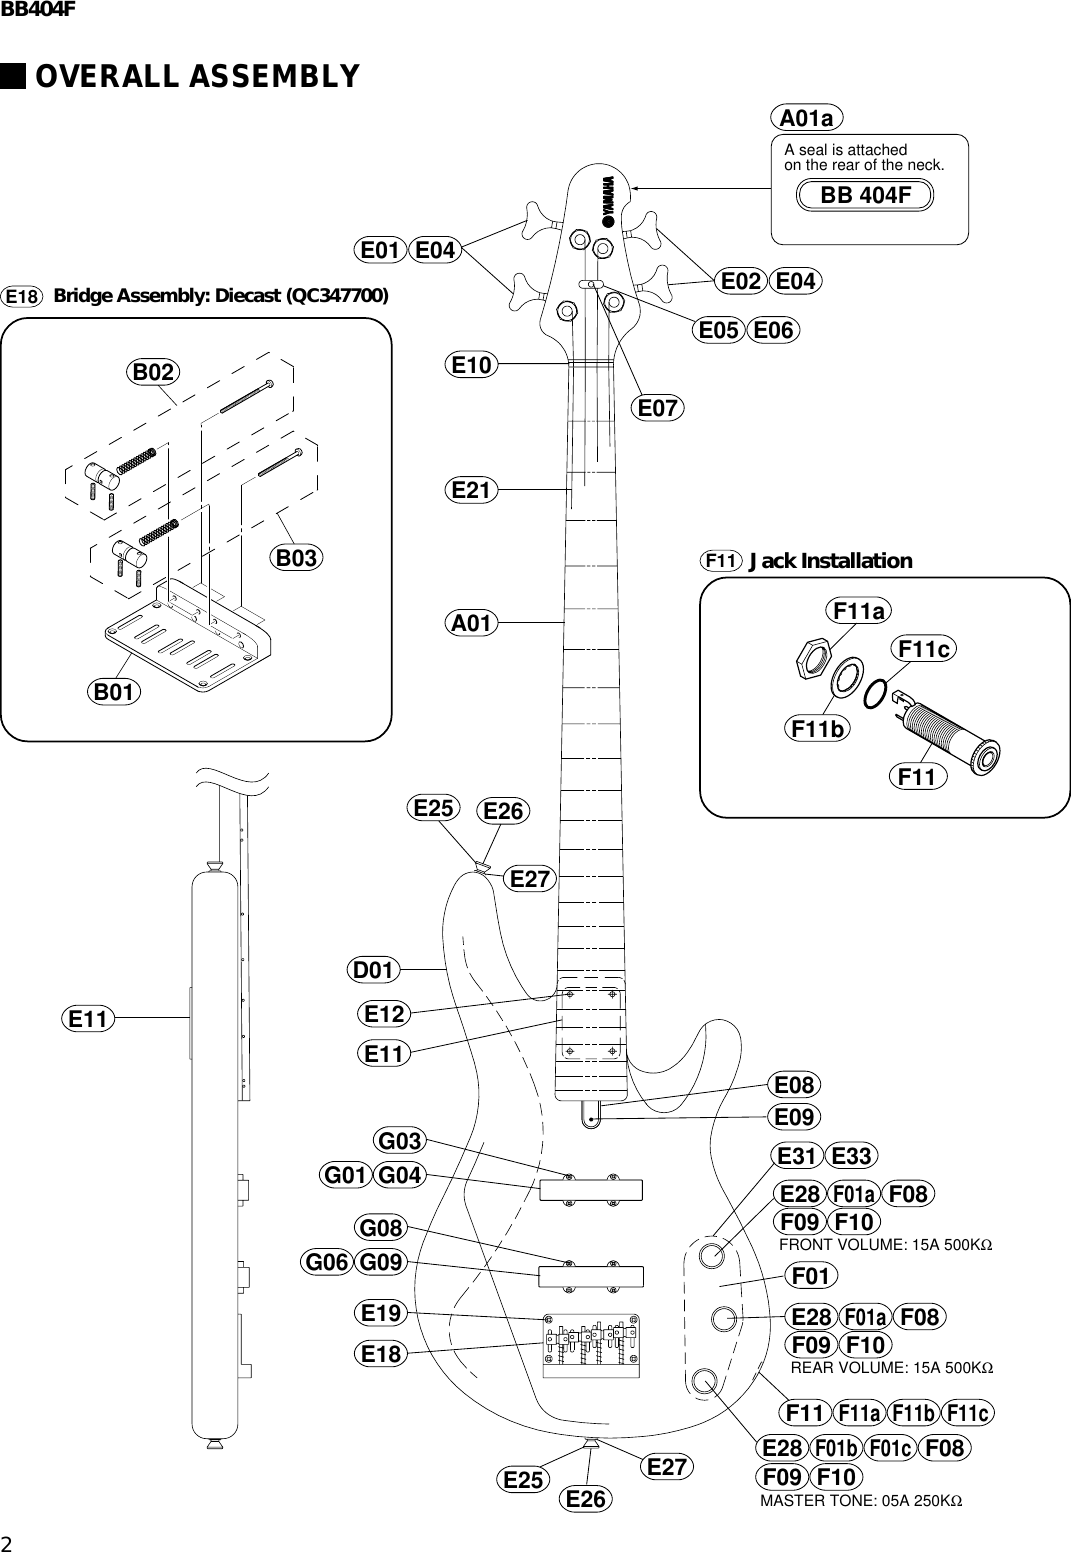 Page 2 of 5 - Yamaha Guitar-Bb404F-Users-Manual ELECTRIC BASS  Yamaha-guitar-bb404f-users-manual